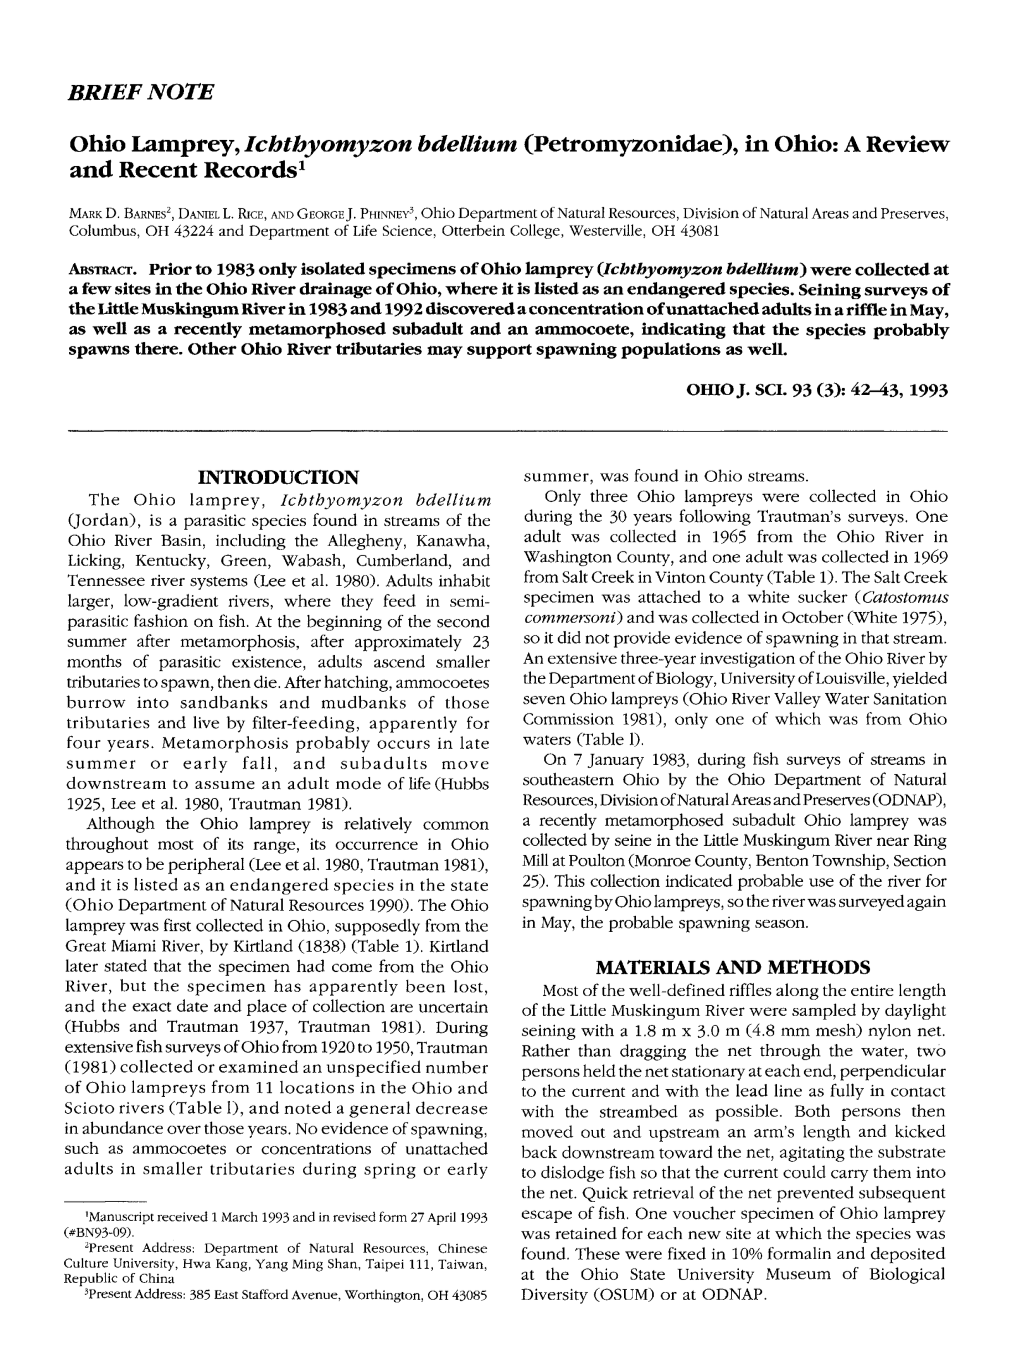 Ohio Lamprey, Ichthyomyzon Bdellium (Petromyzonidae), in Ohio: a Review and Recent Records1